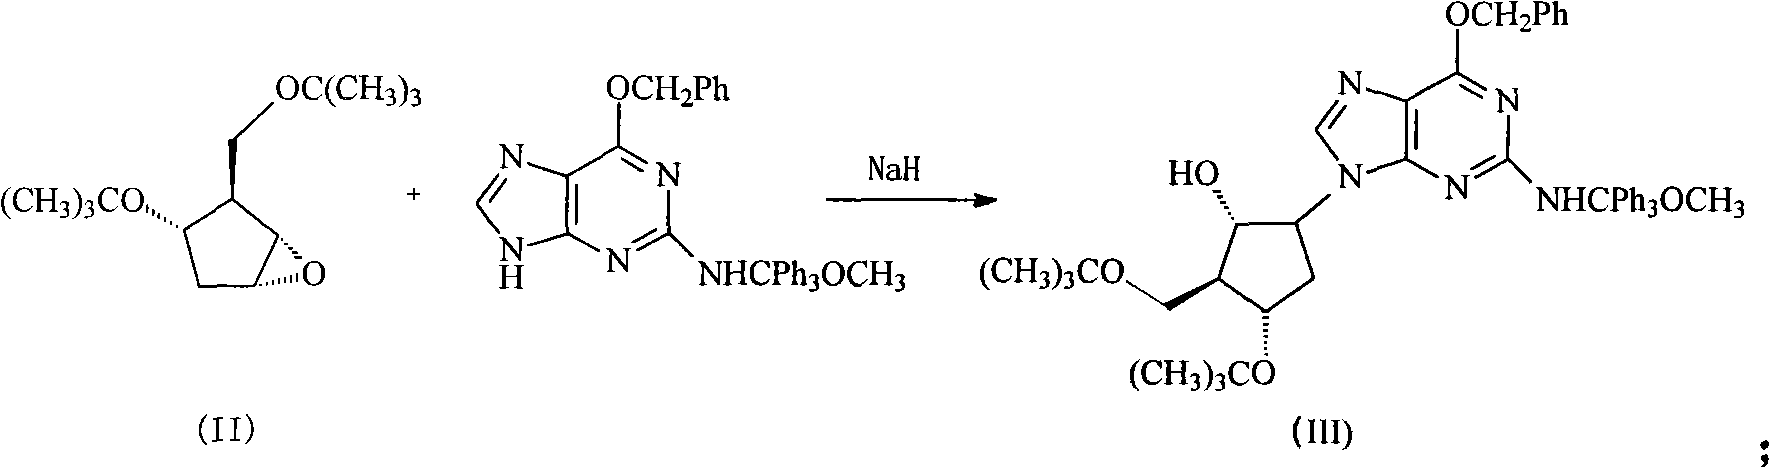 Entecavir compound prepared in novel method